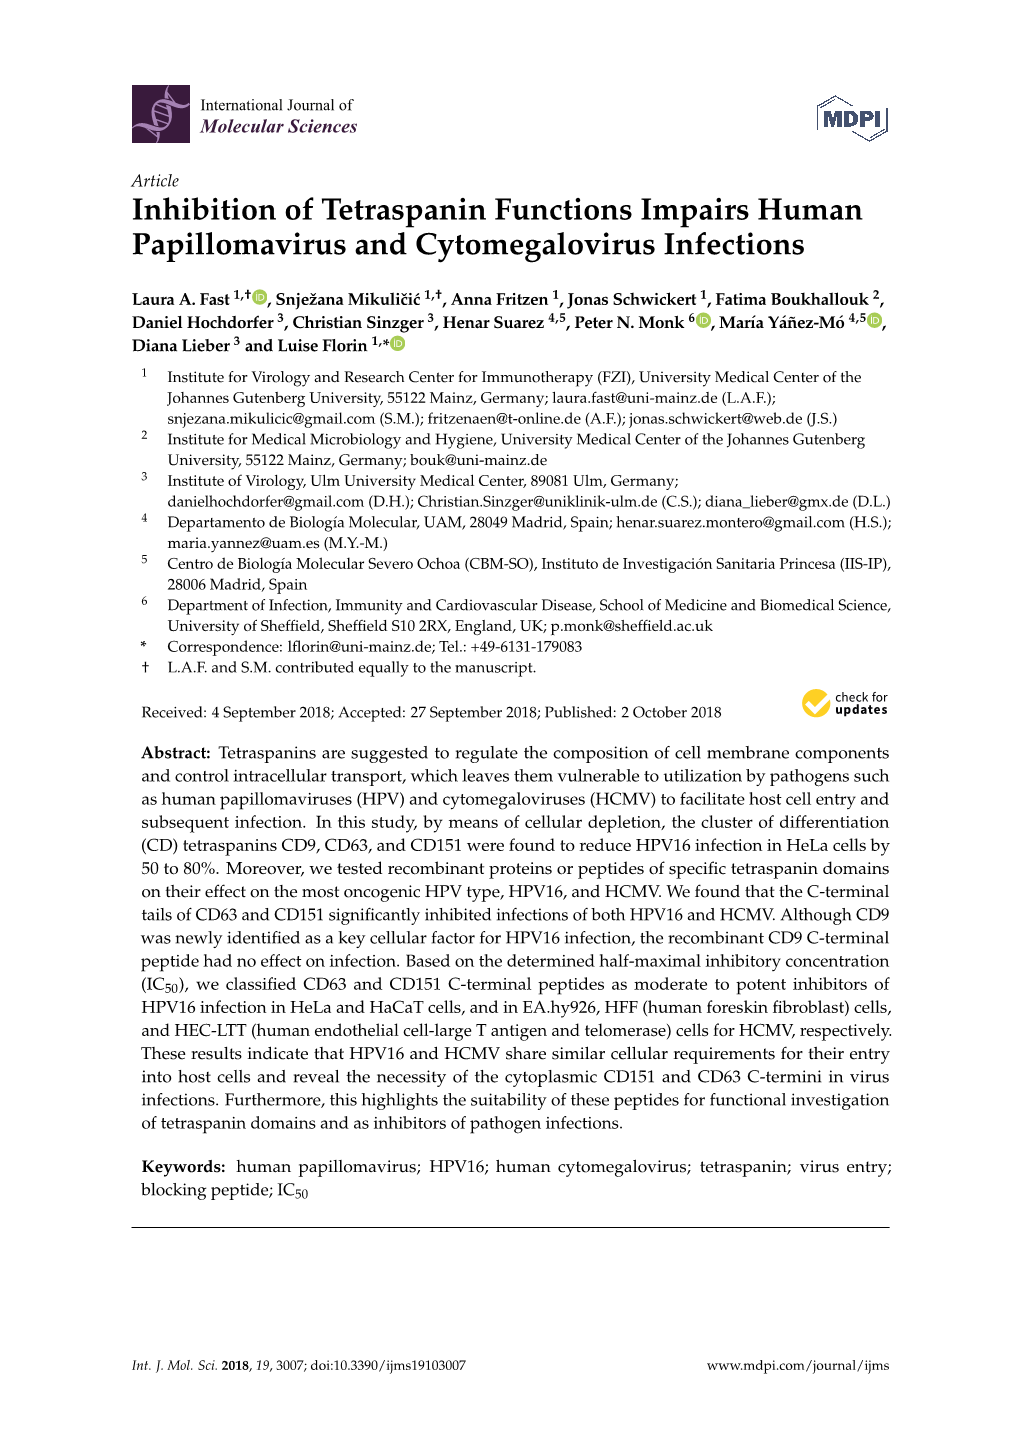 Inhibition of Tetraspanin Functions Impairs Human Papillomavirus and Cytomegalovirus Infections